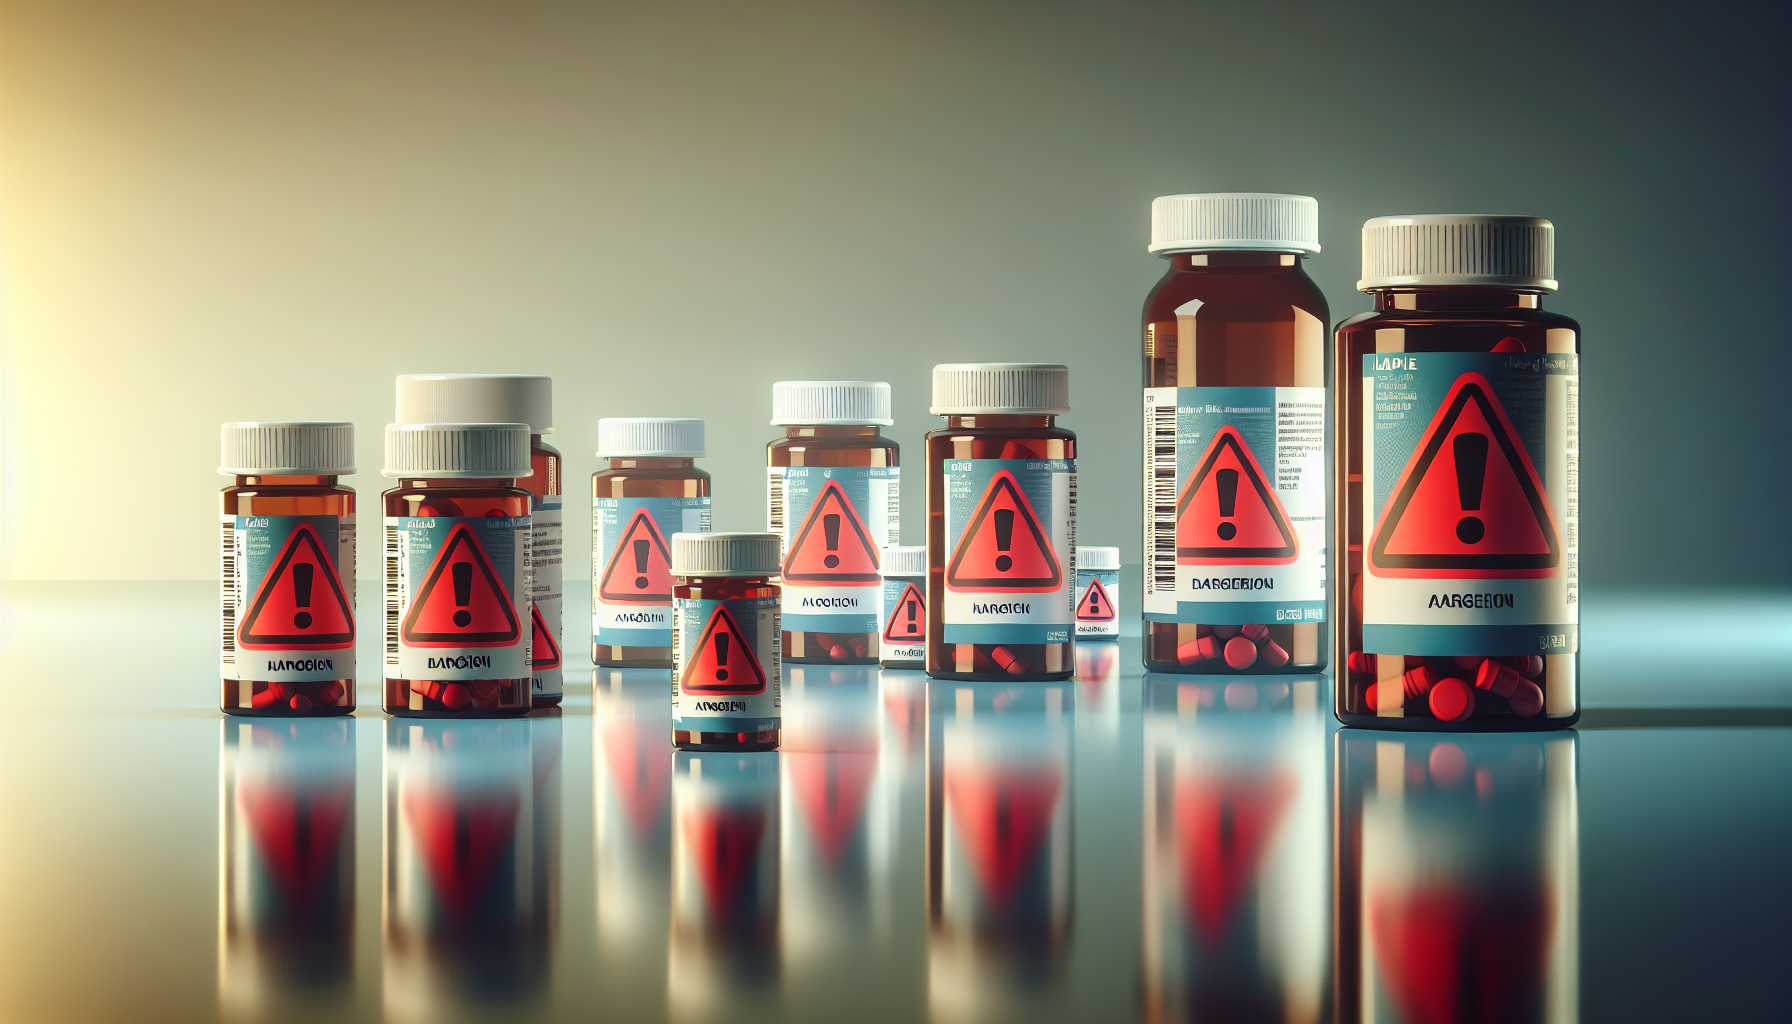 Illustration of medication bottles with warning signs